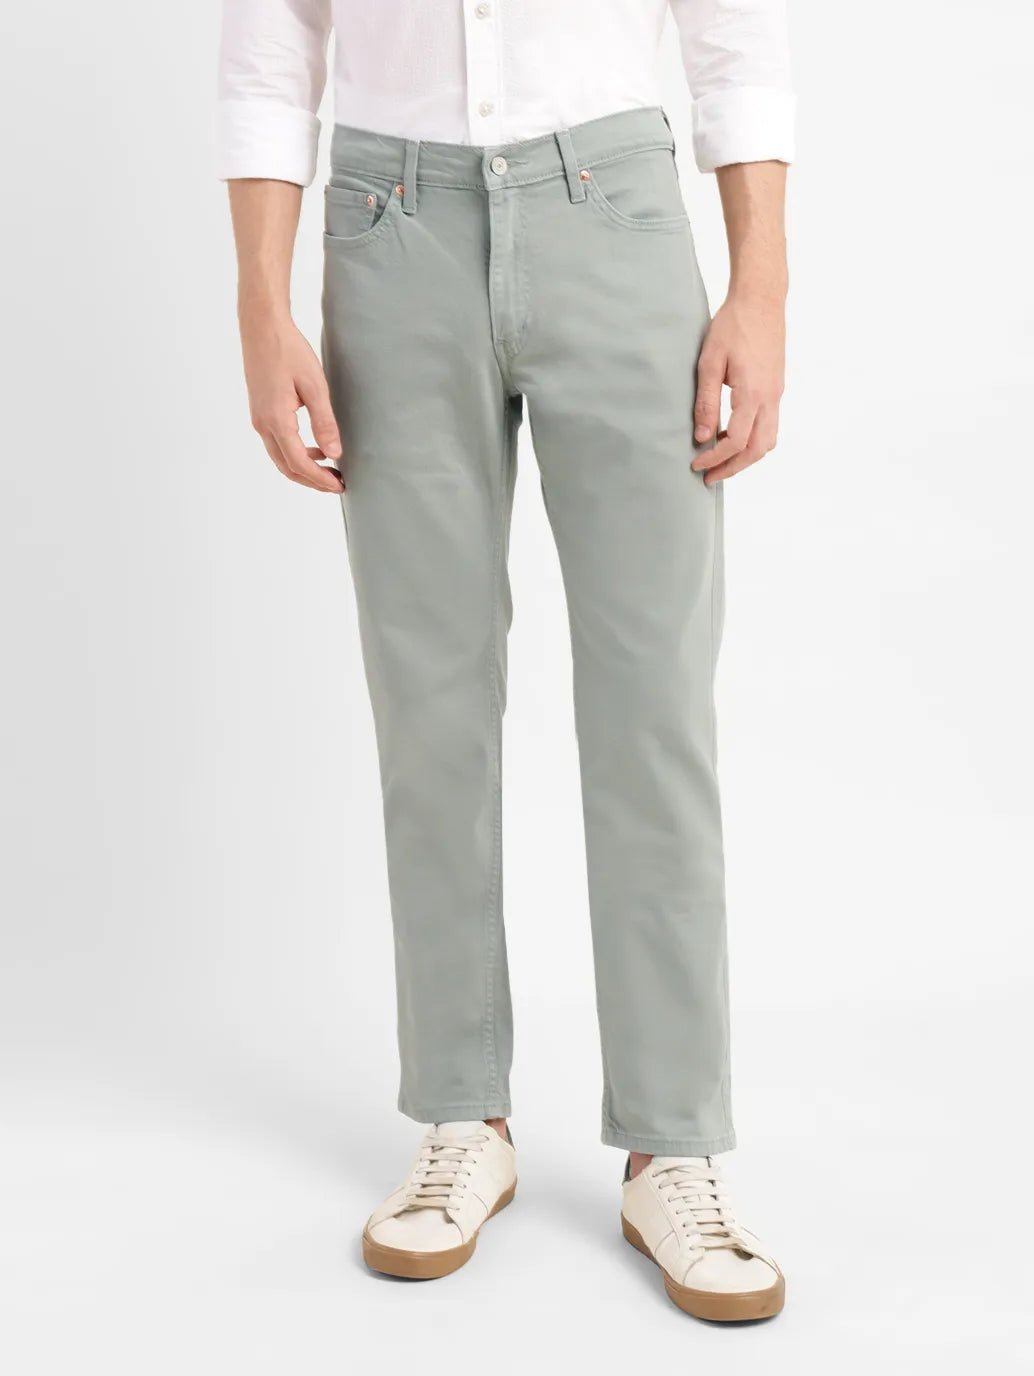 Men's 511 Grey Slim Fit Jeans